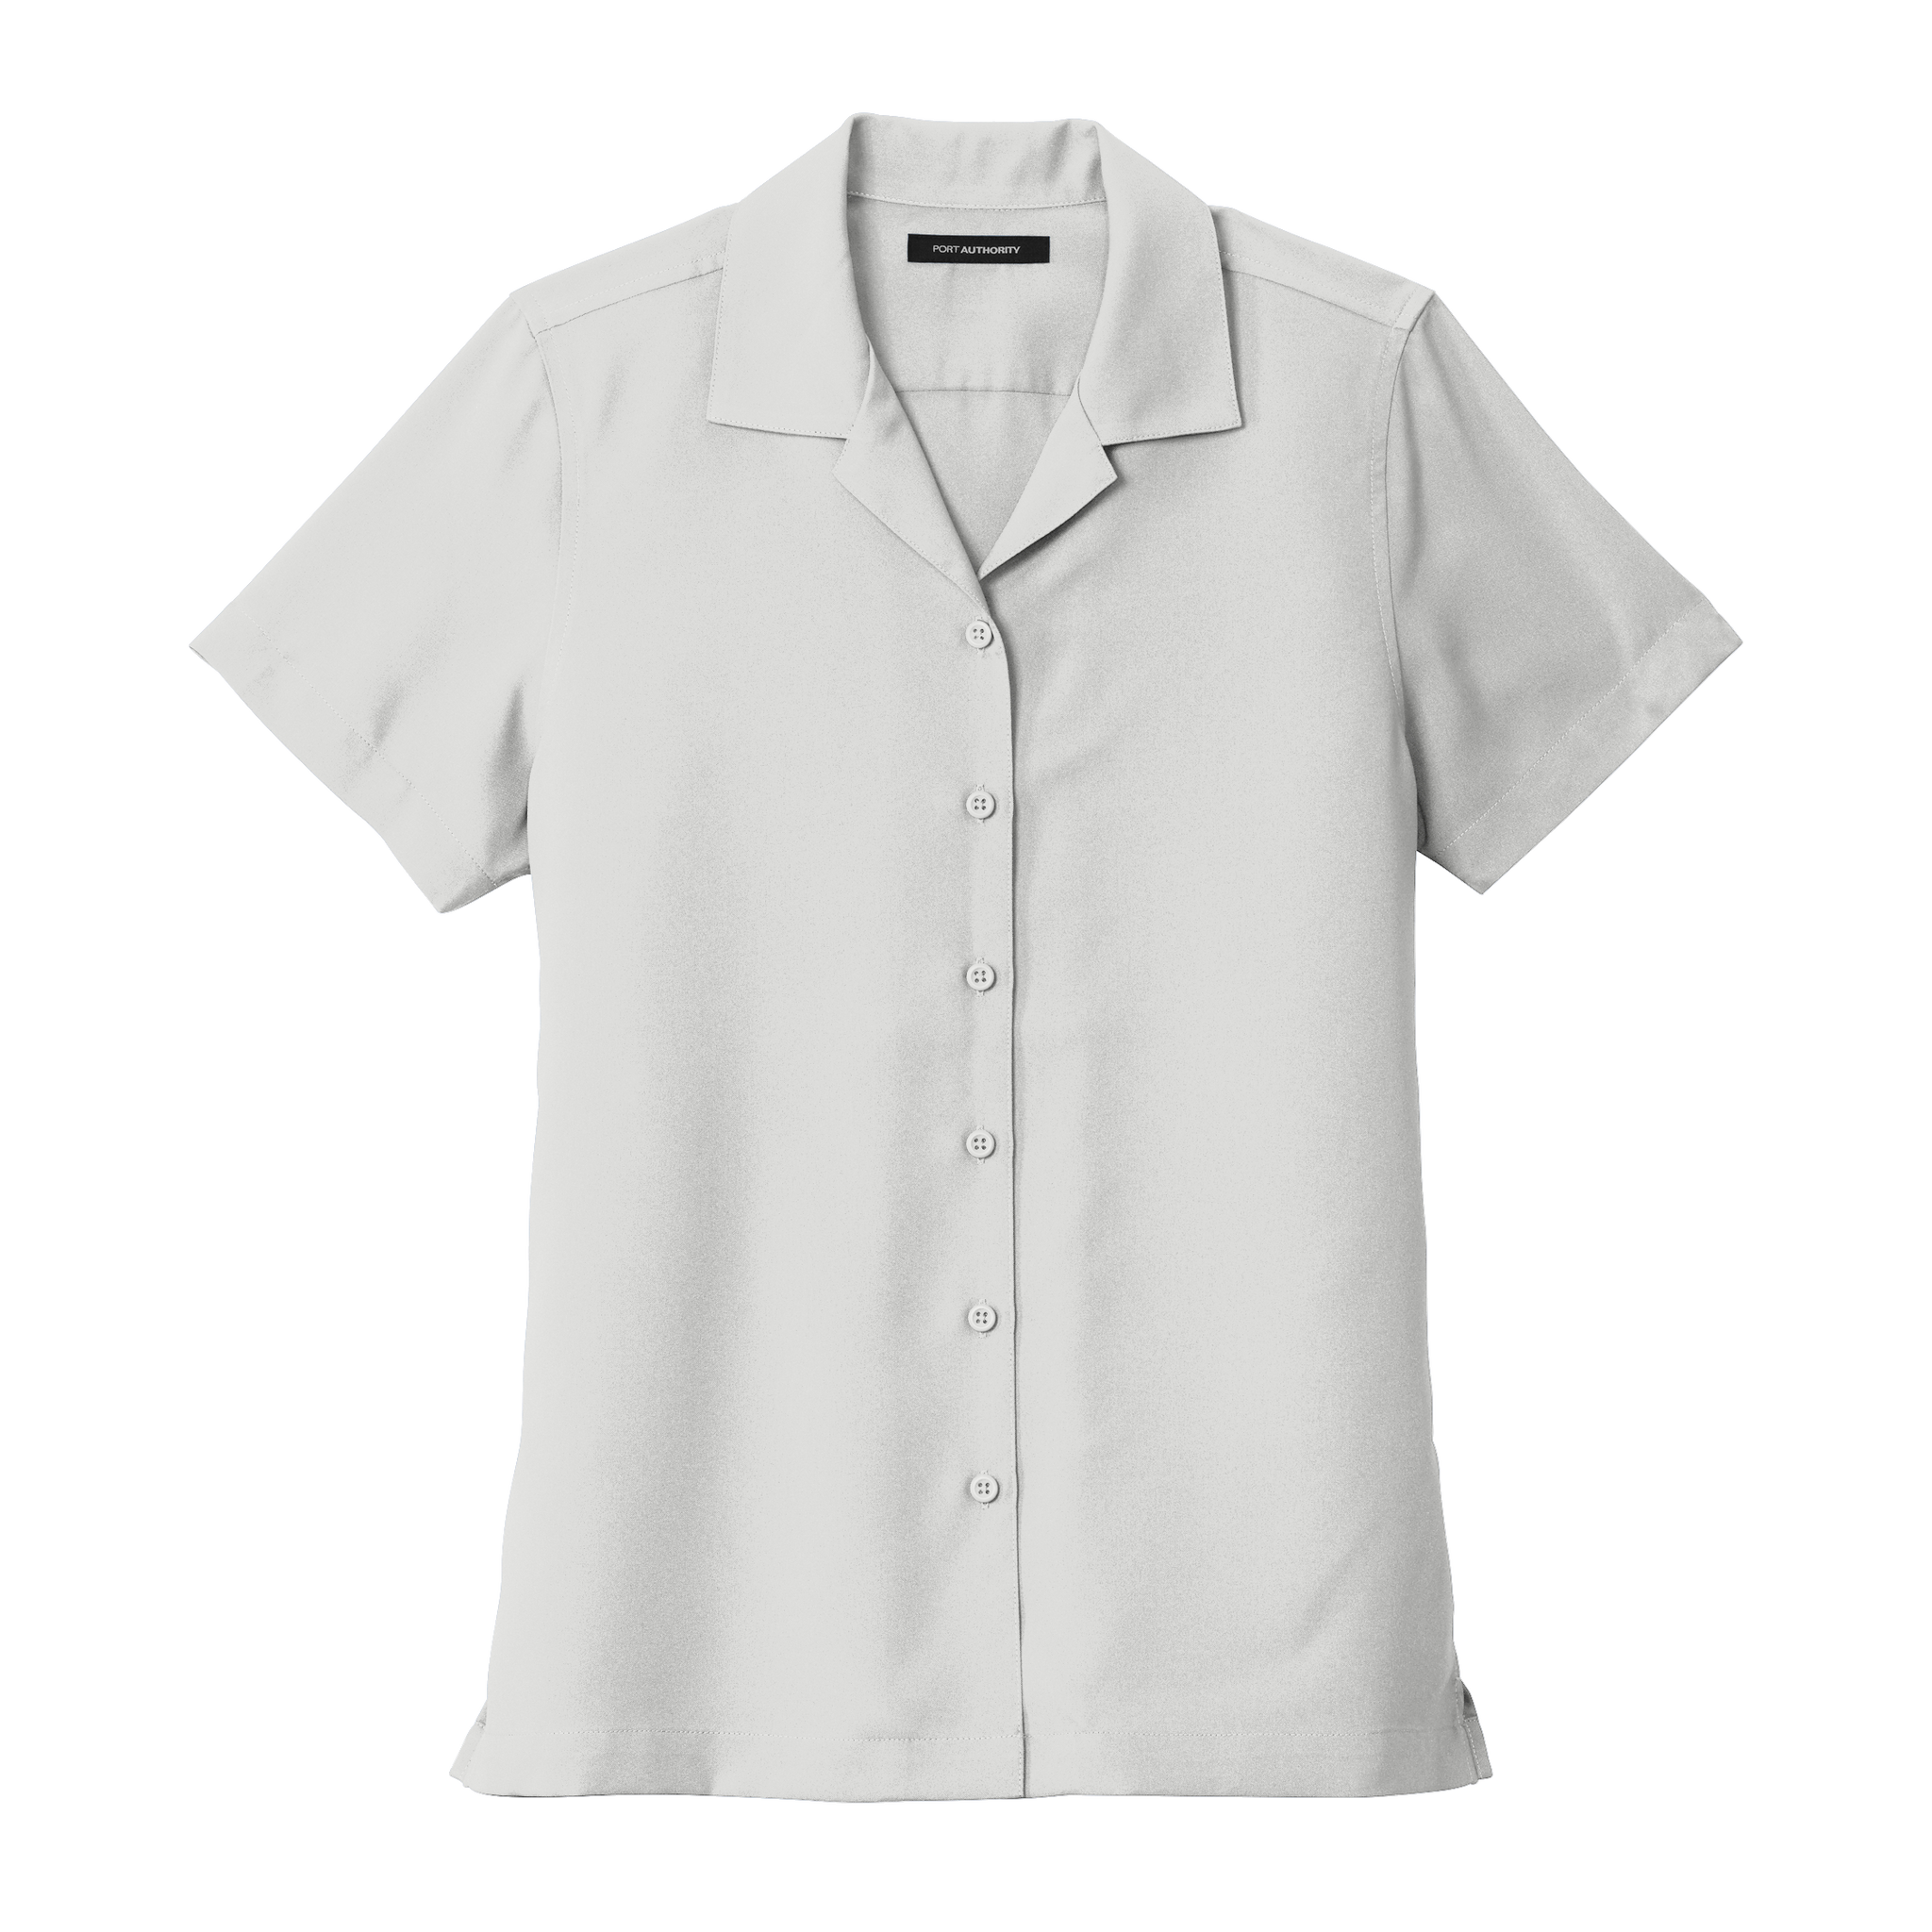 A2074W Ladies Short Sleeve Performance Staff Shirt